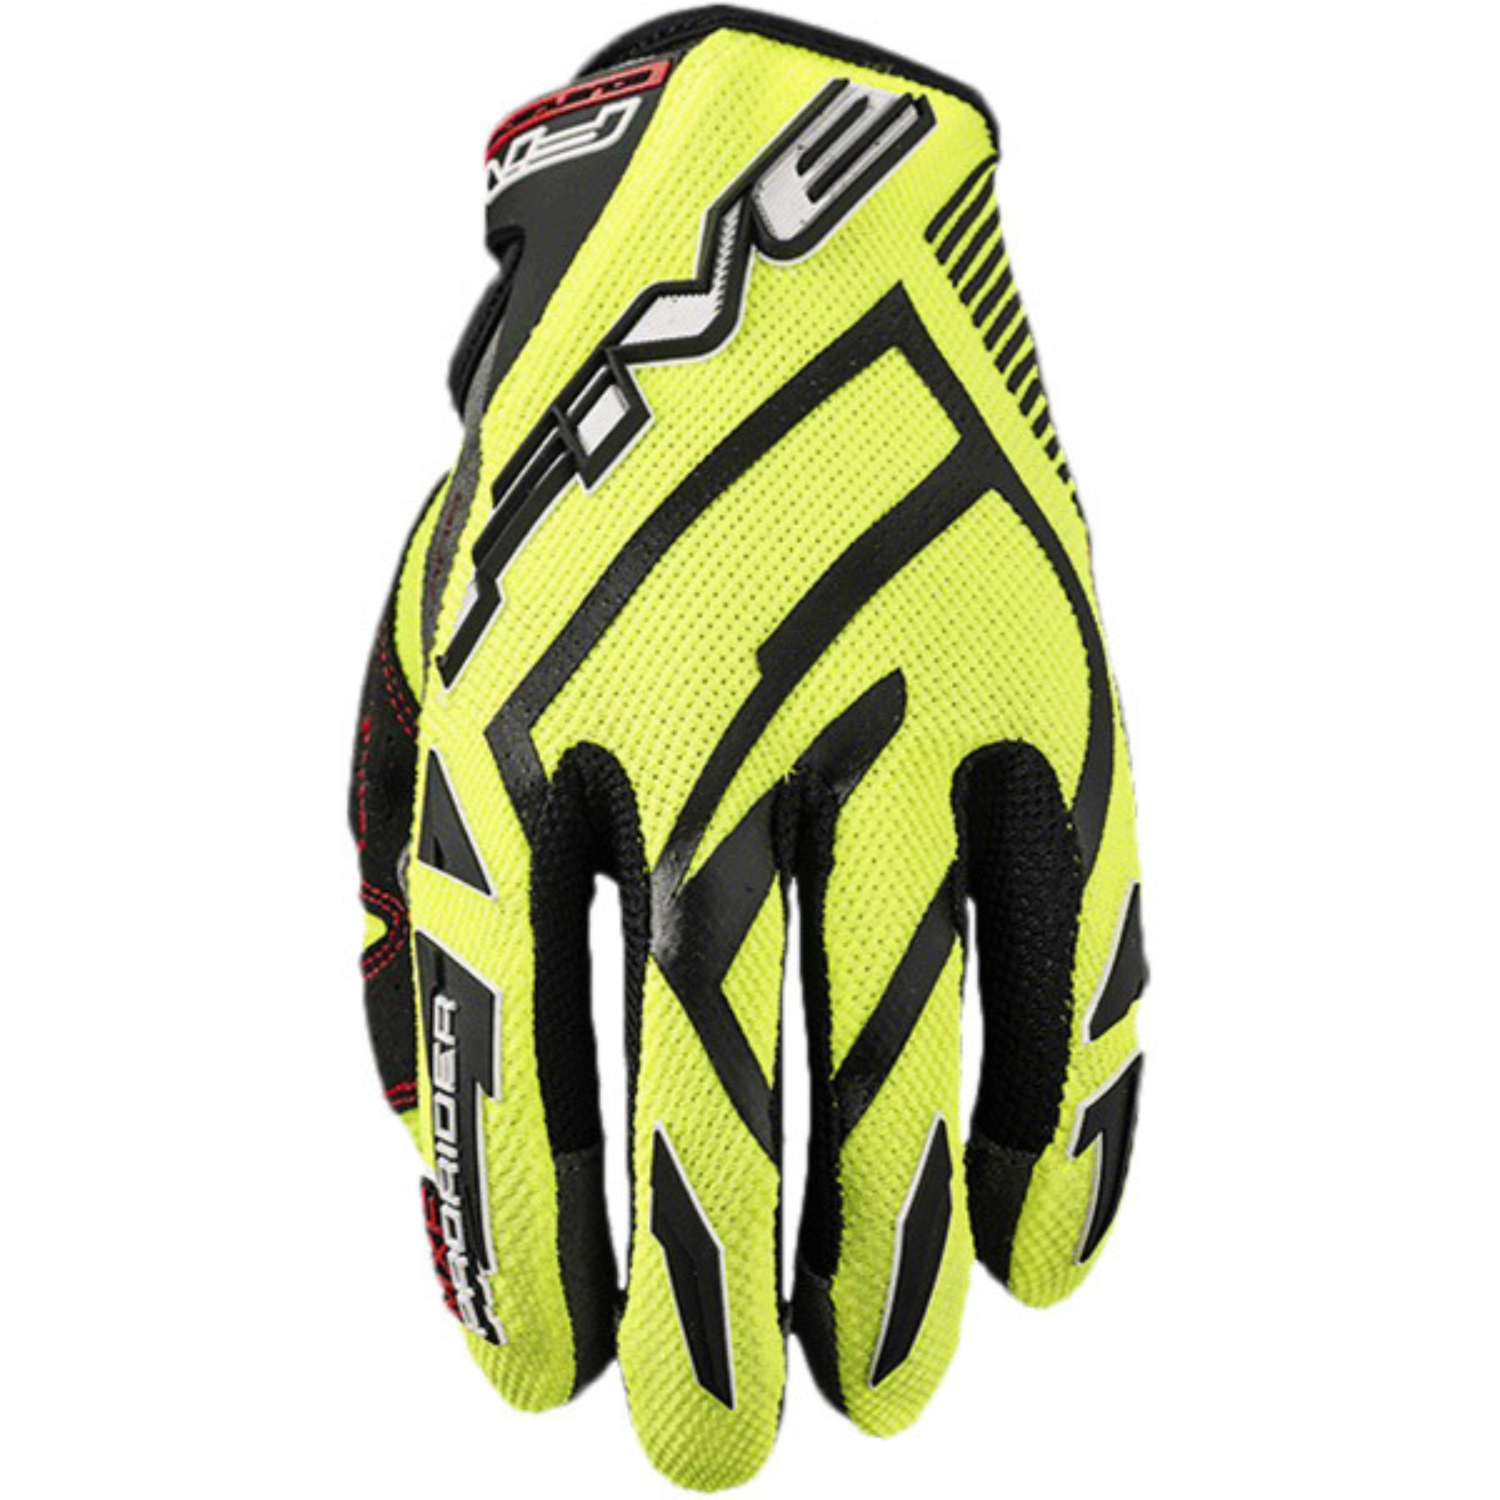 Image of Five MXF Prorider S Gloves Black Yellow Größe L